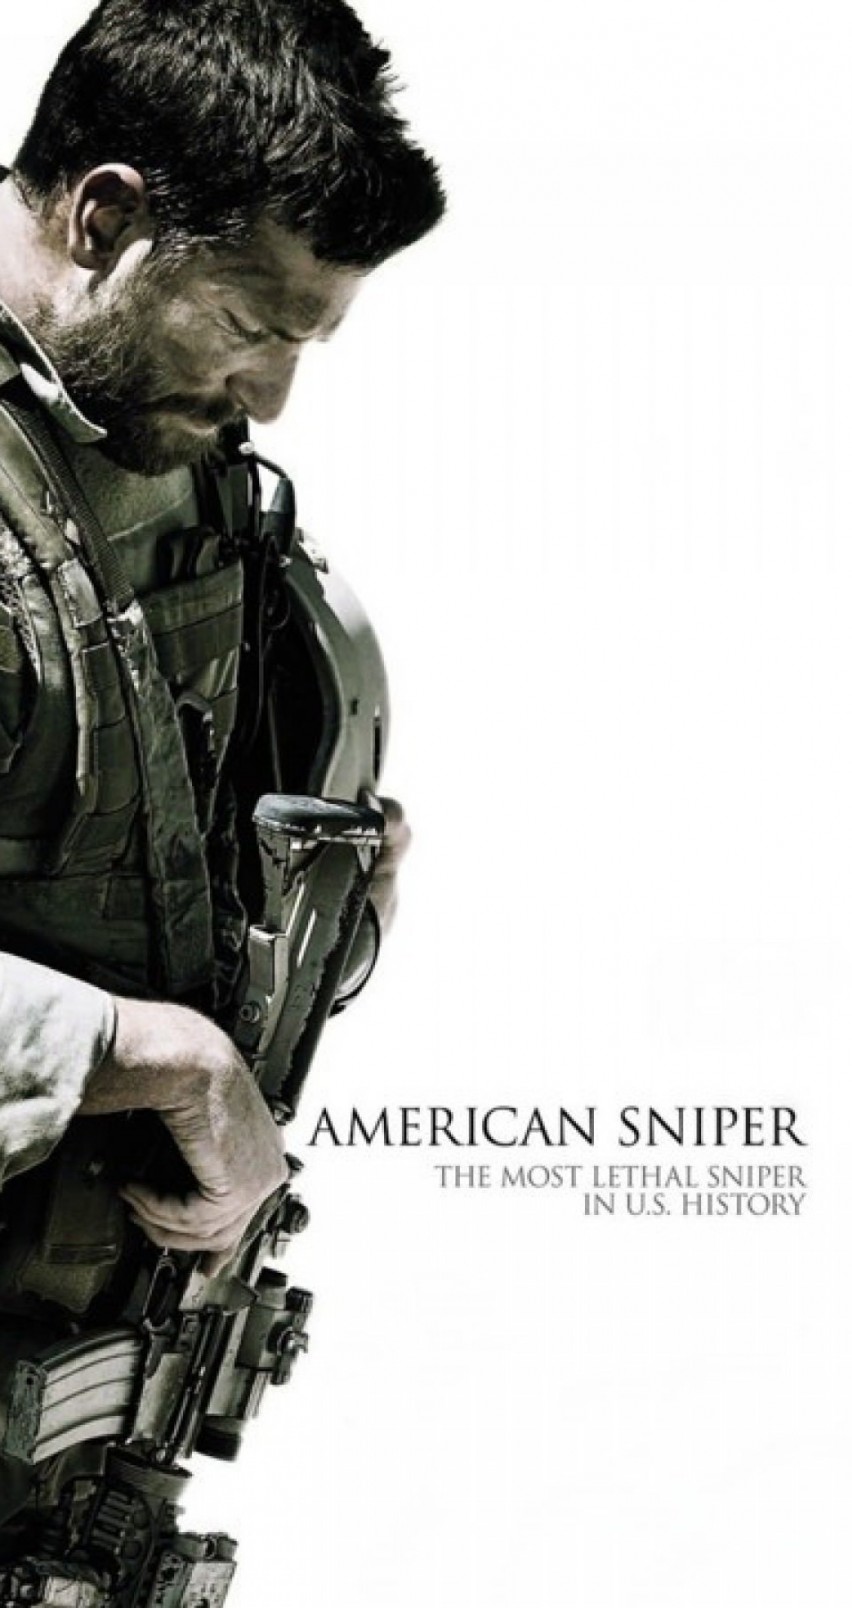 Bradley Cooper As Chris Kyle in American sniper Wallpaper for Apple iPhone 6 / 6s